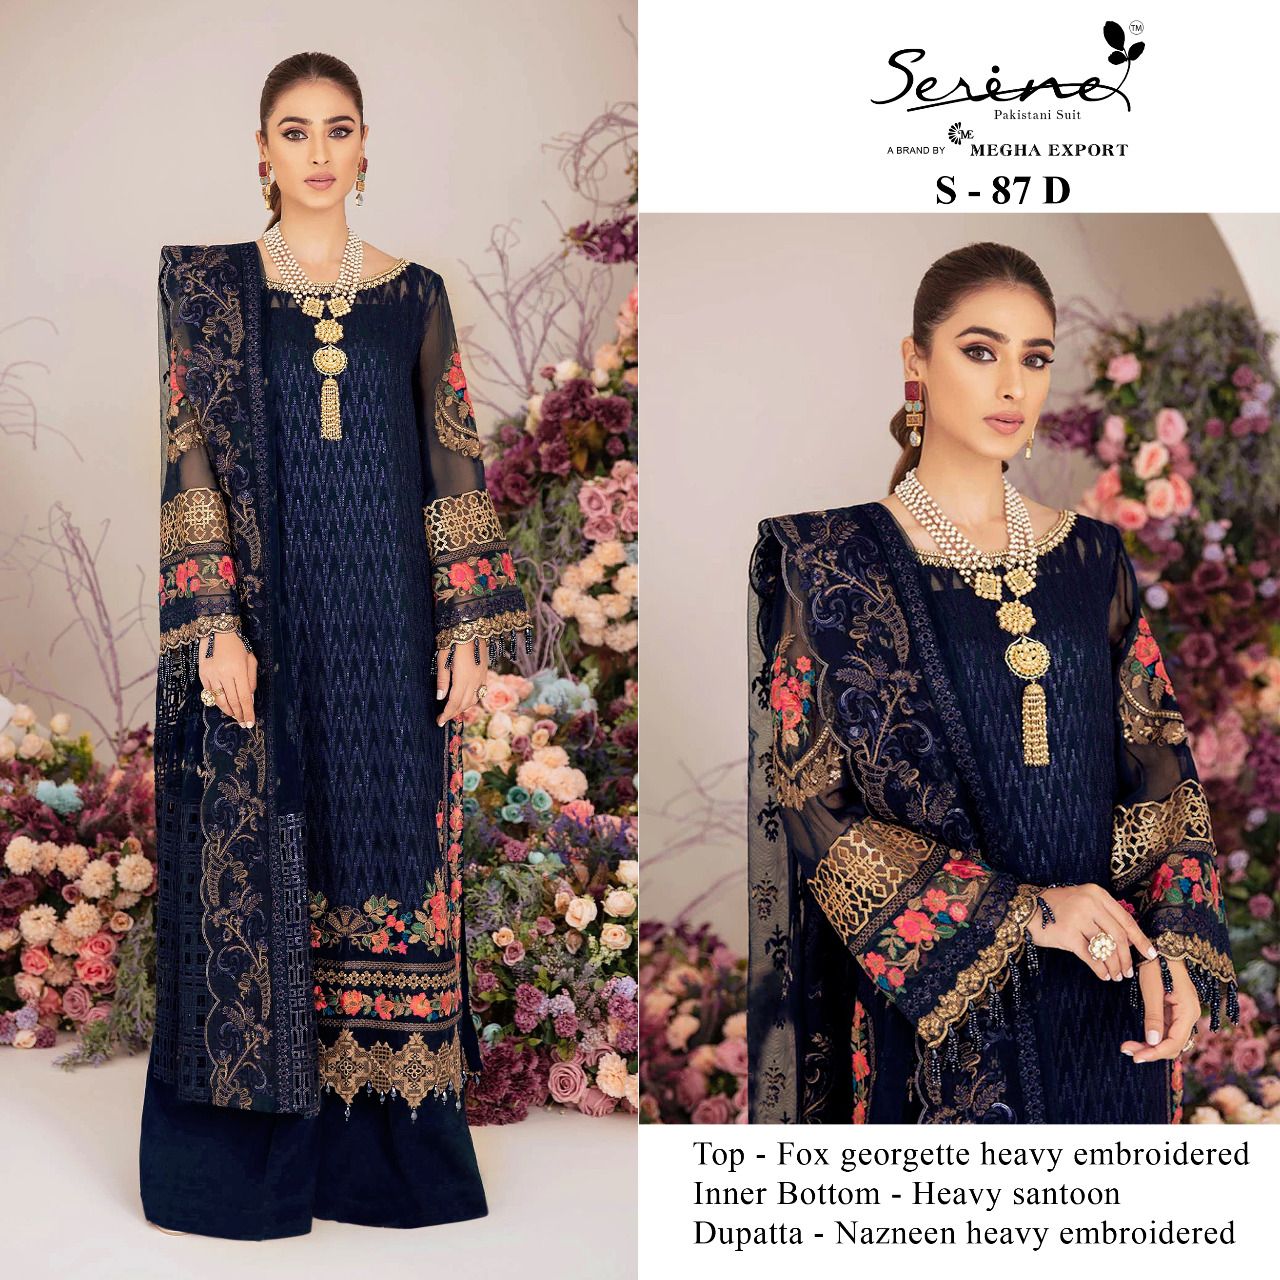 serine Megha Exports serine s 87 georgette decent look salwar suit catalog